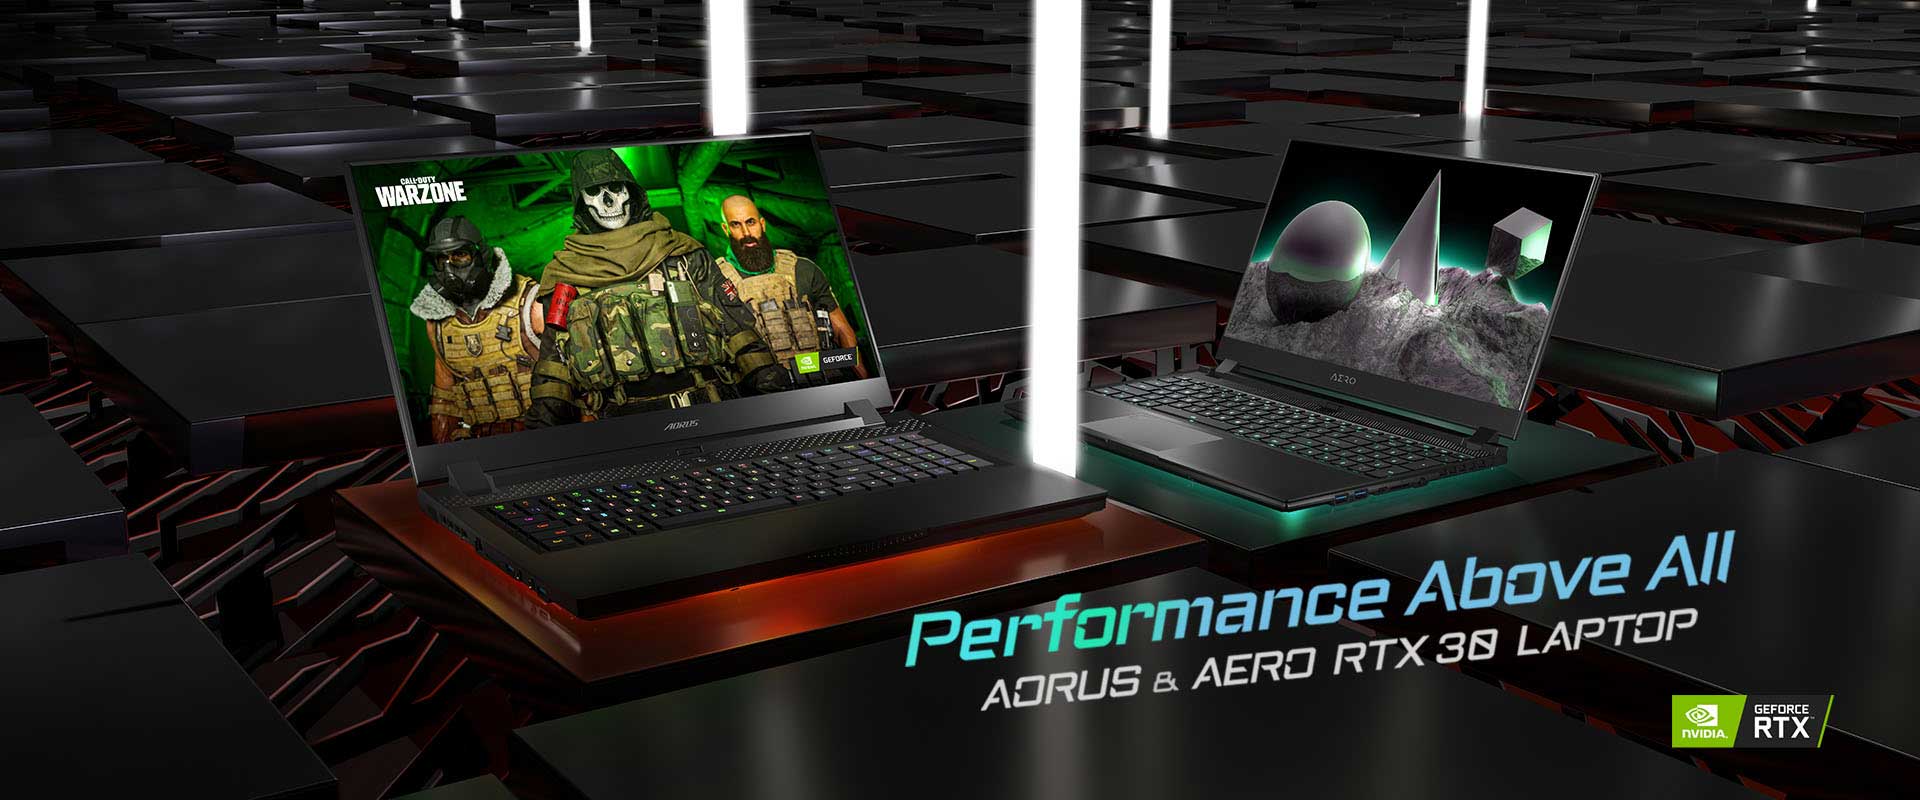 Gigabyte Notebooks and Radeon GPUs Now On Sale